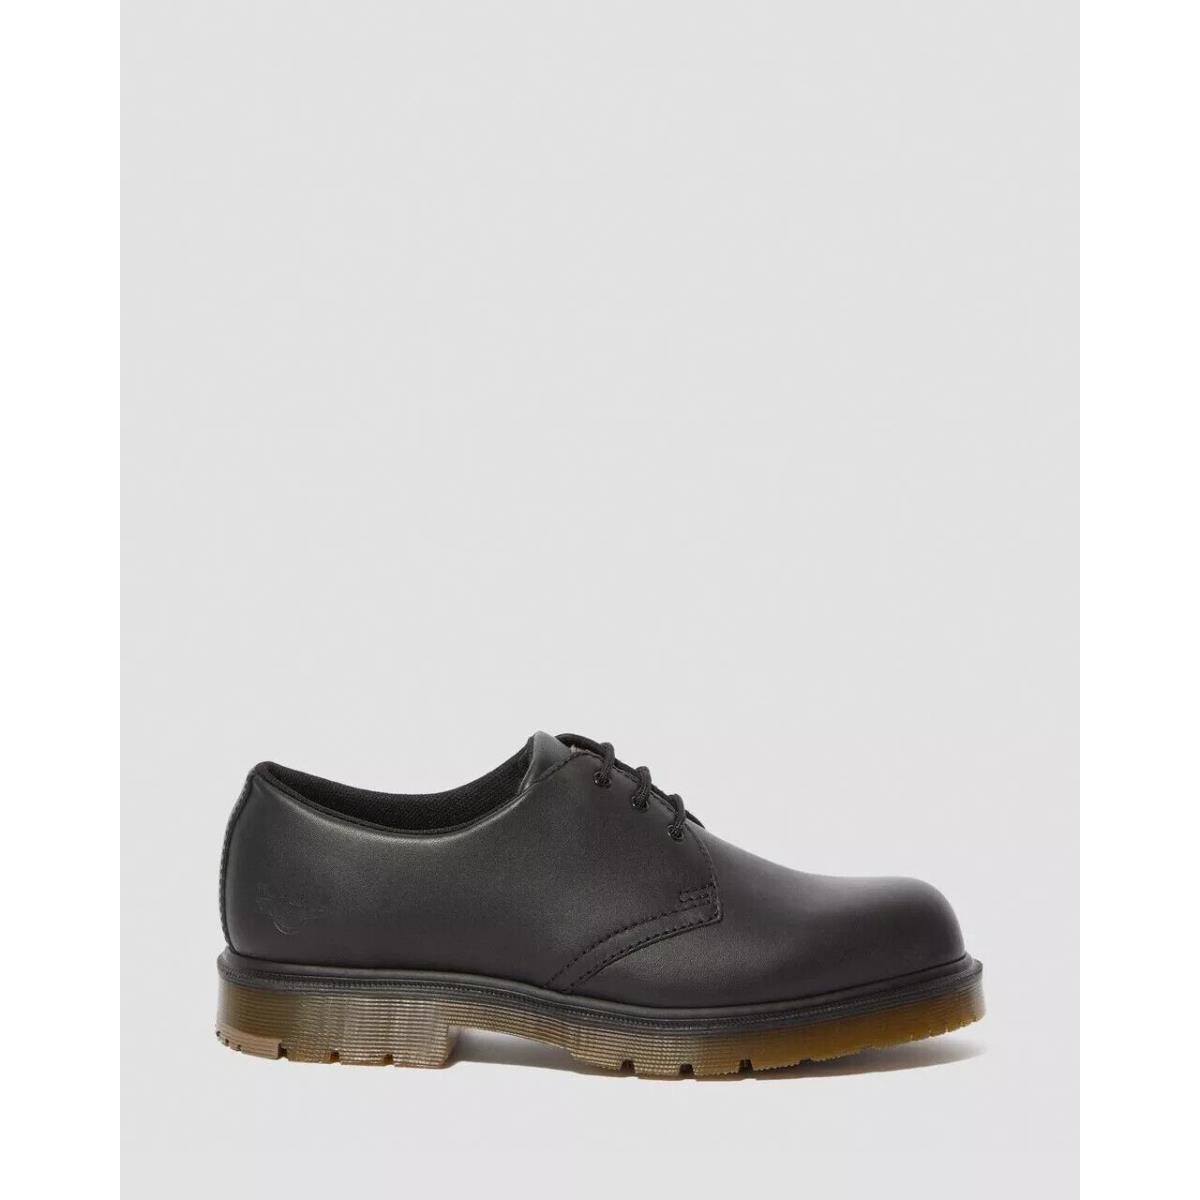 Dr Martens Arlington Black Industrial Full-grain Shoes Men s Size 7 23122001